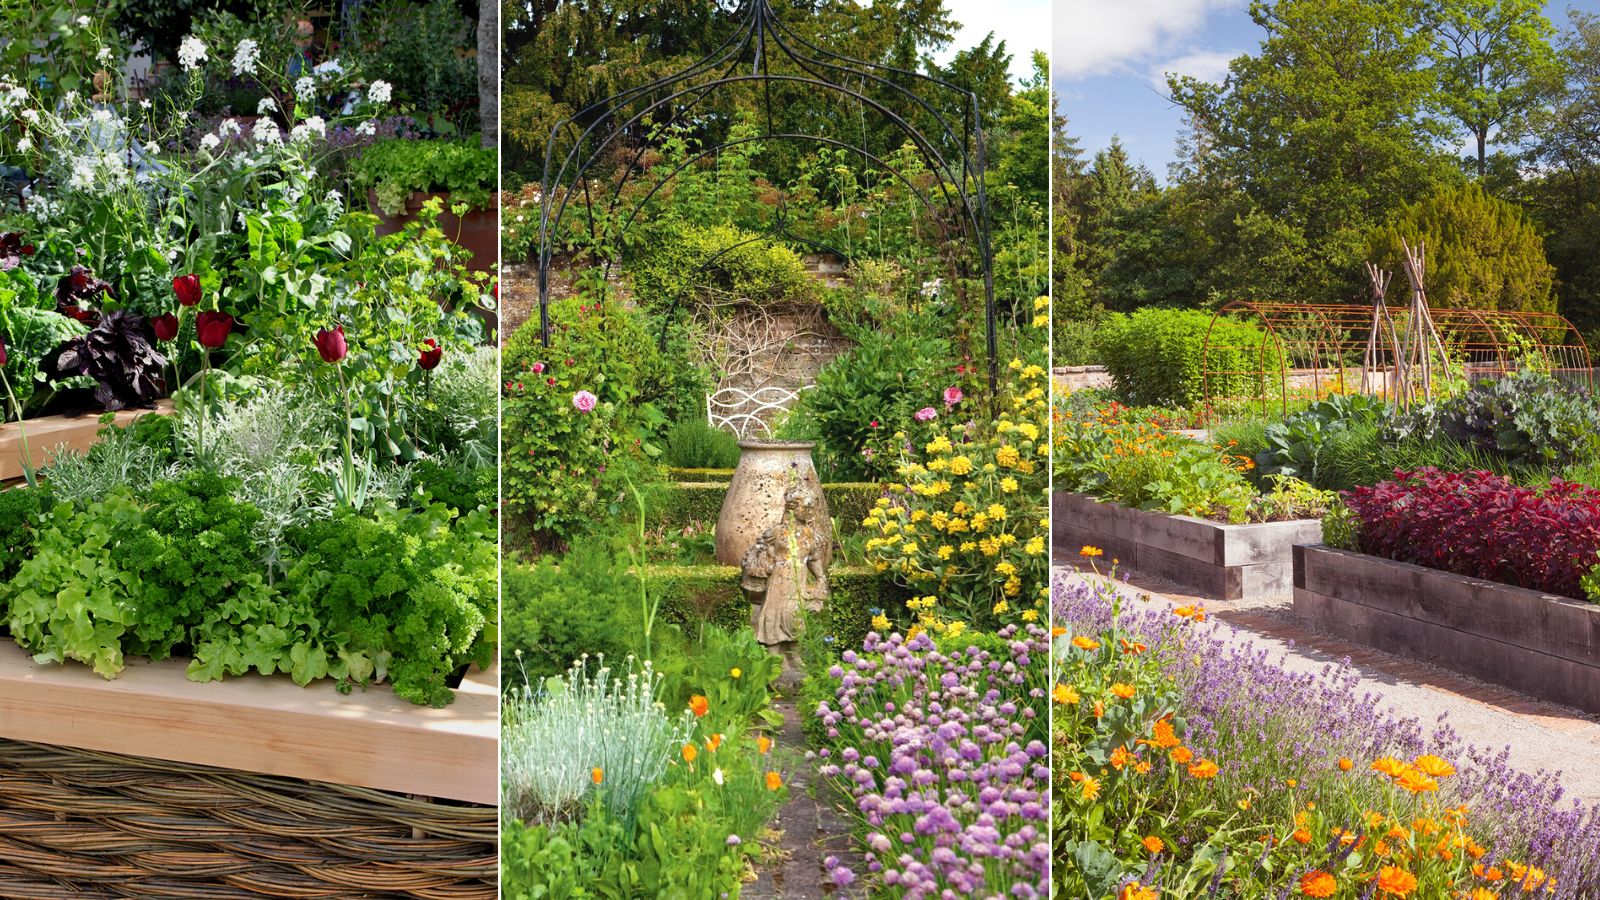 Jonathan Anderson Shares His Favorite Gardens Across the Globe